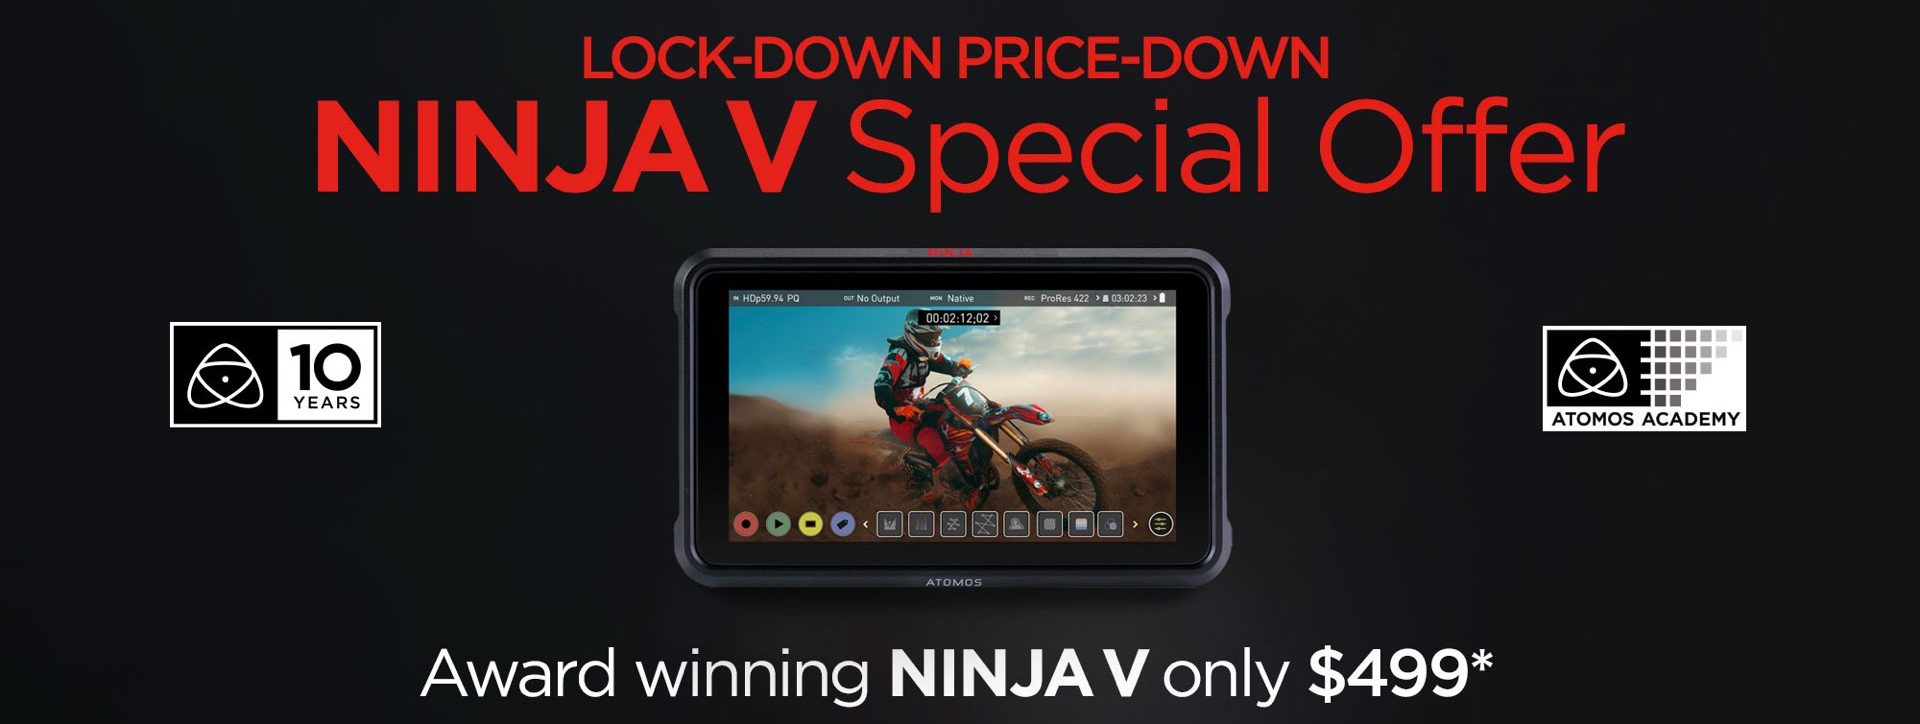 Ninja V special offer. Picture: Atomos